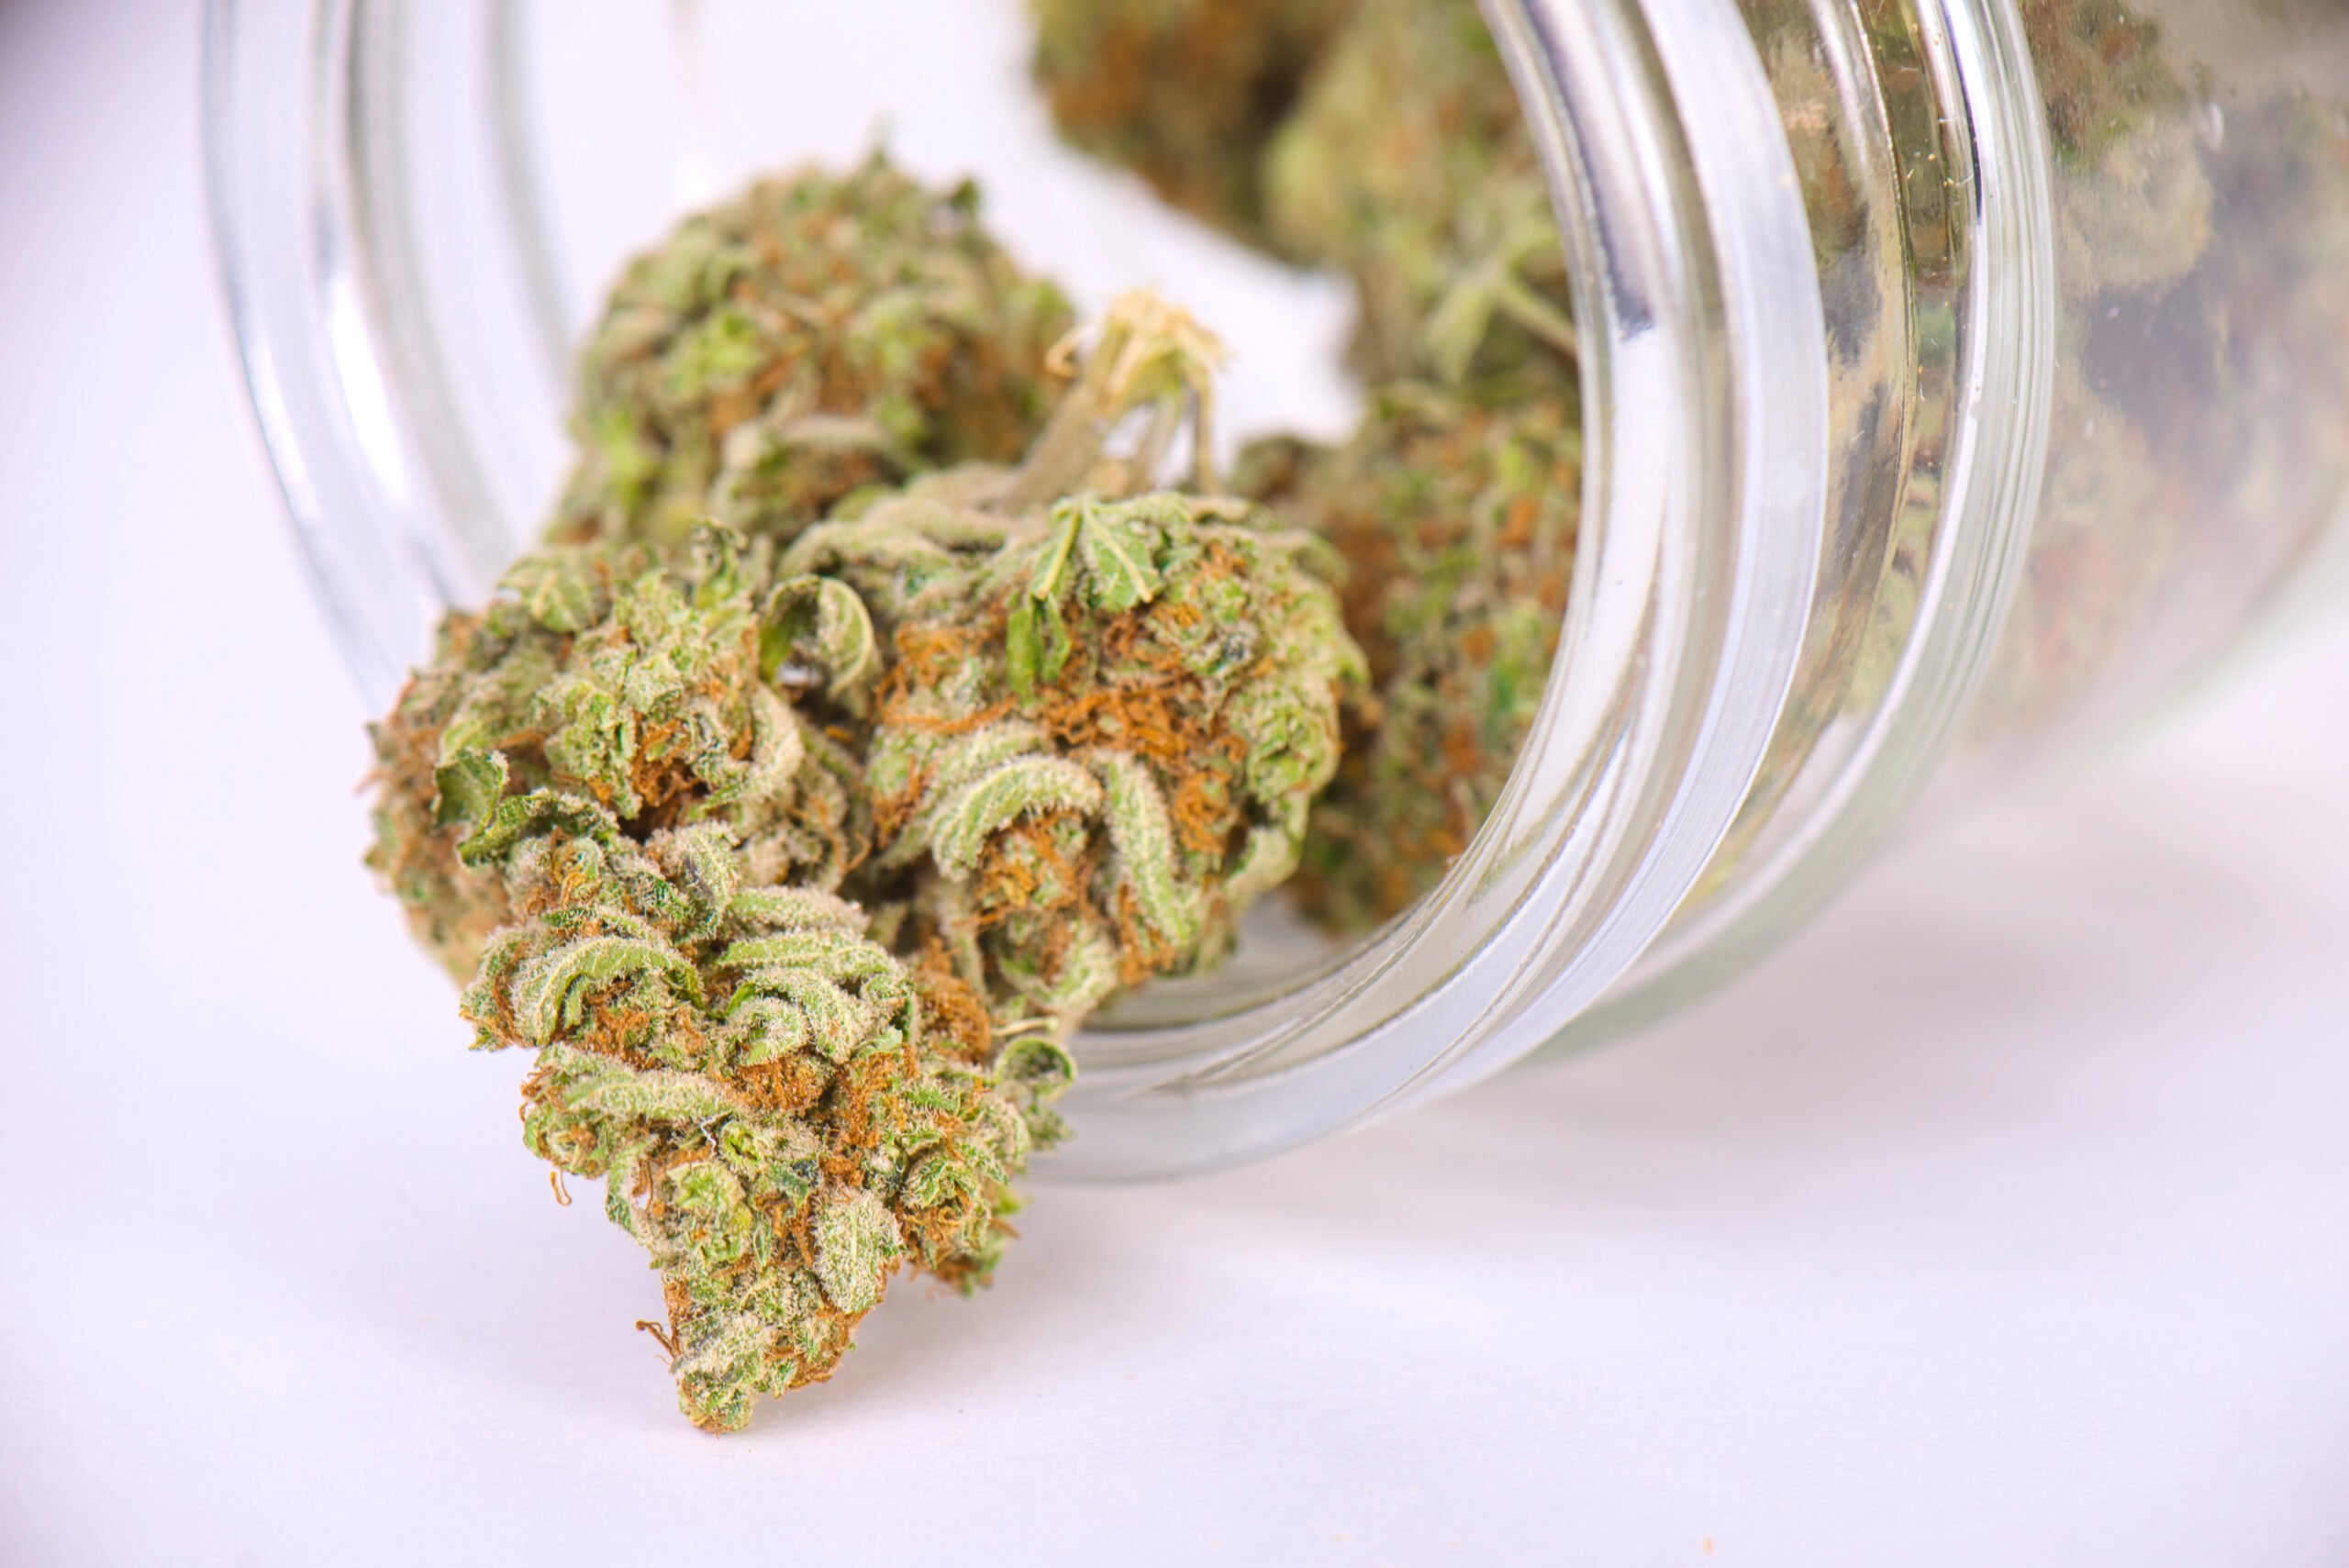 Tangie strain of Weed – Marijuana Review by Green Sativa Dispensary